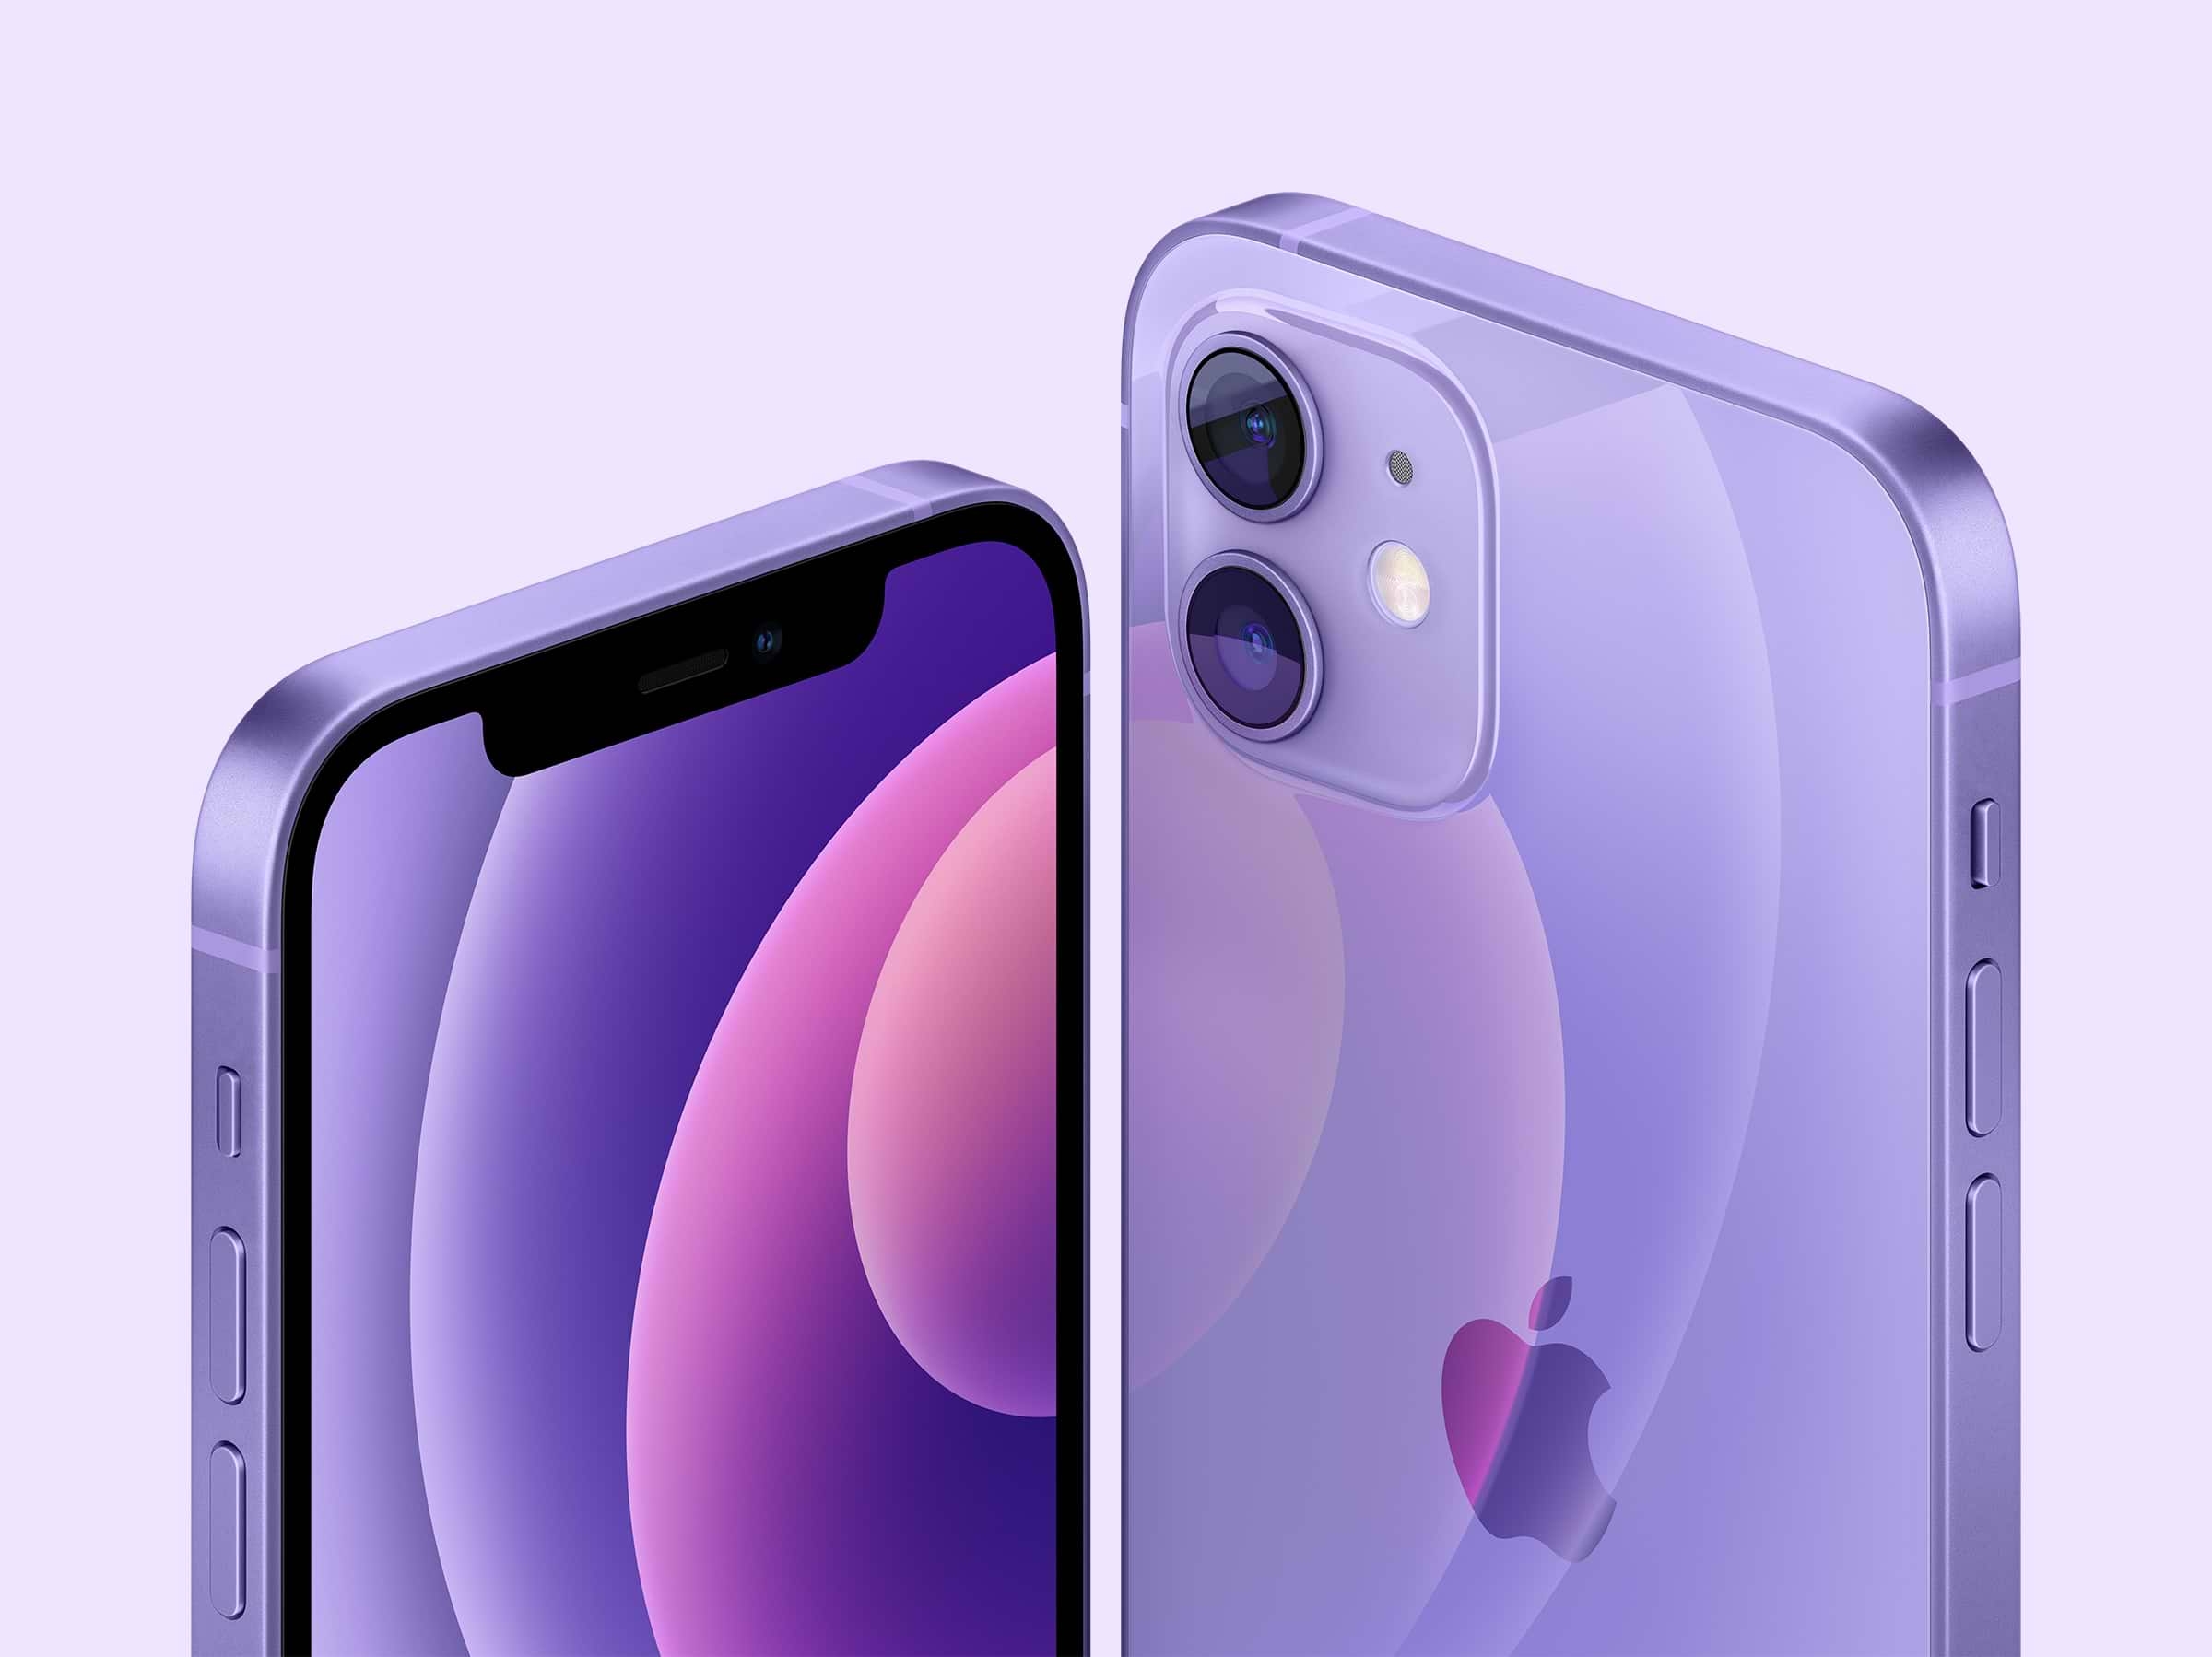 אייפון 12 ו- אייפון 12 מיני בצבע סגול אחד מול השני